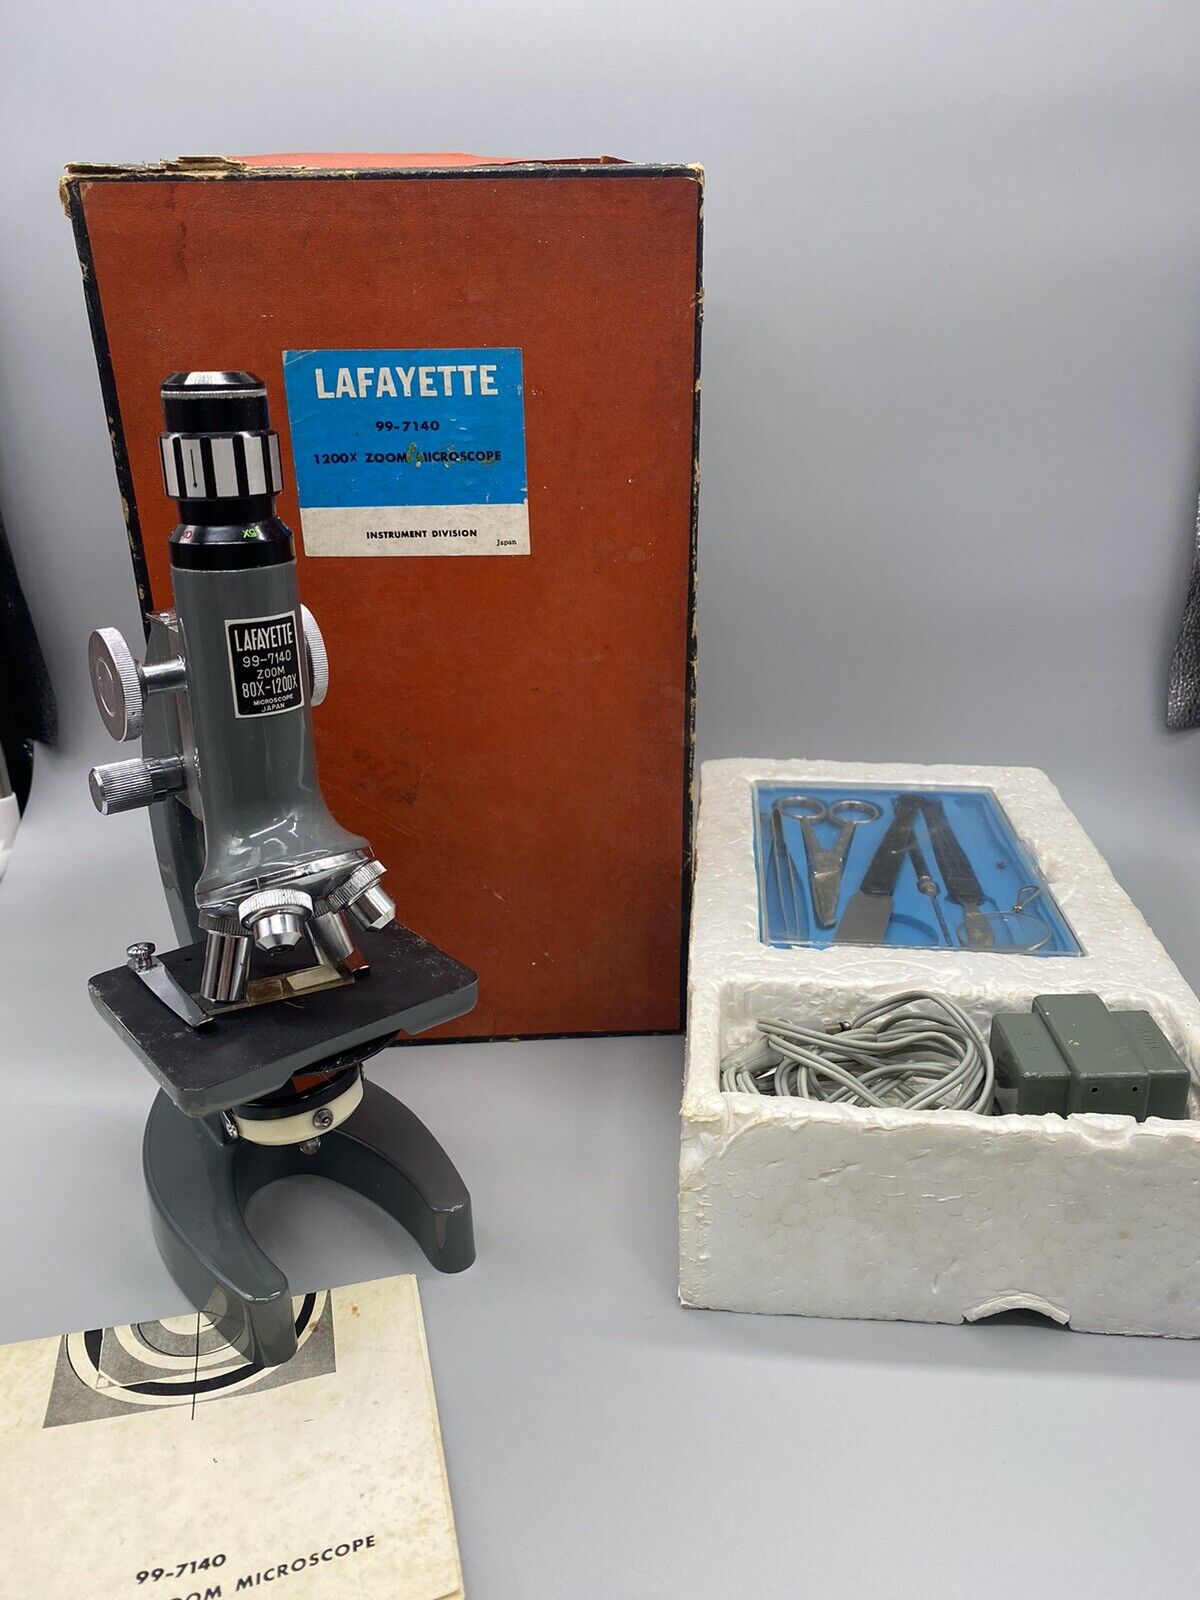 Vintage LAFAYETTE 99-7140 80x-1200x Zoom Microscope 